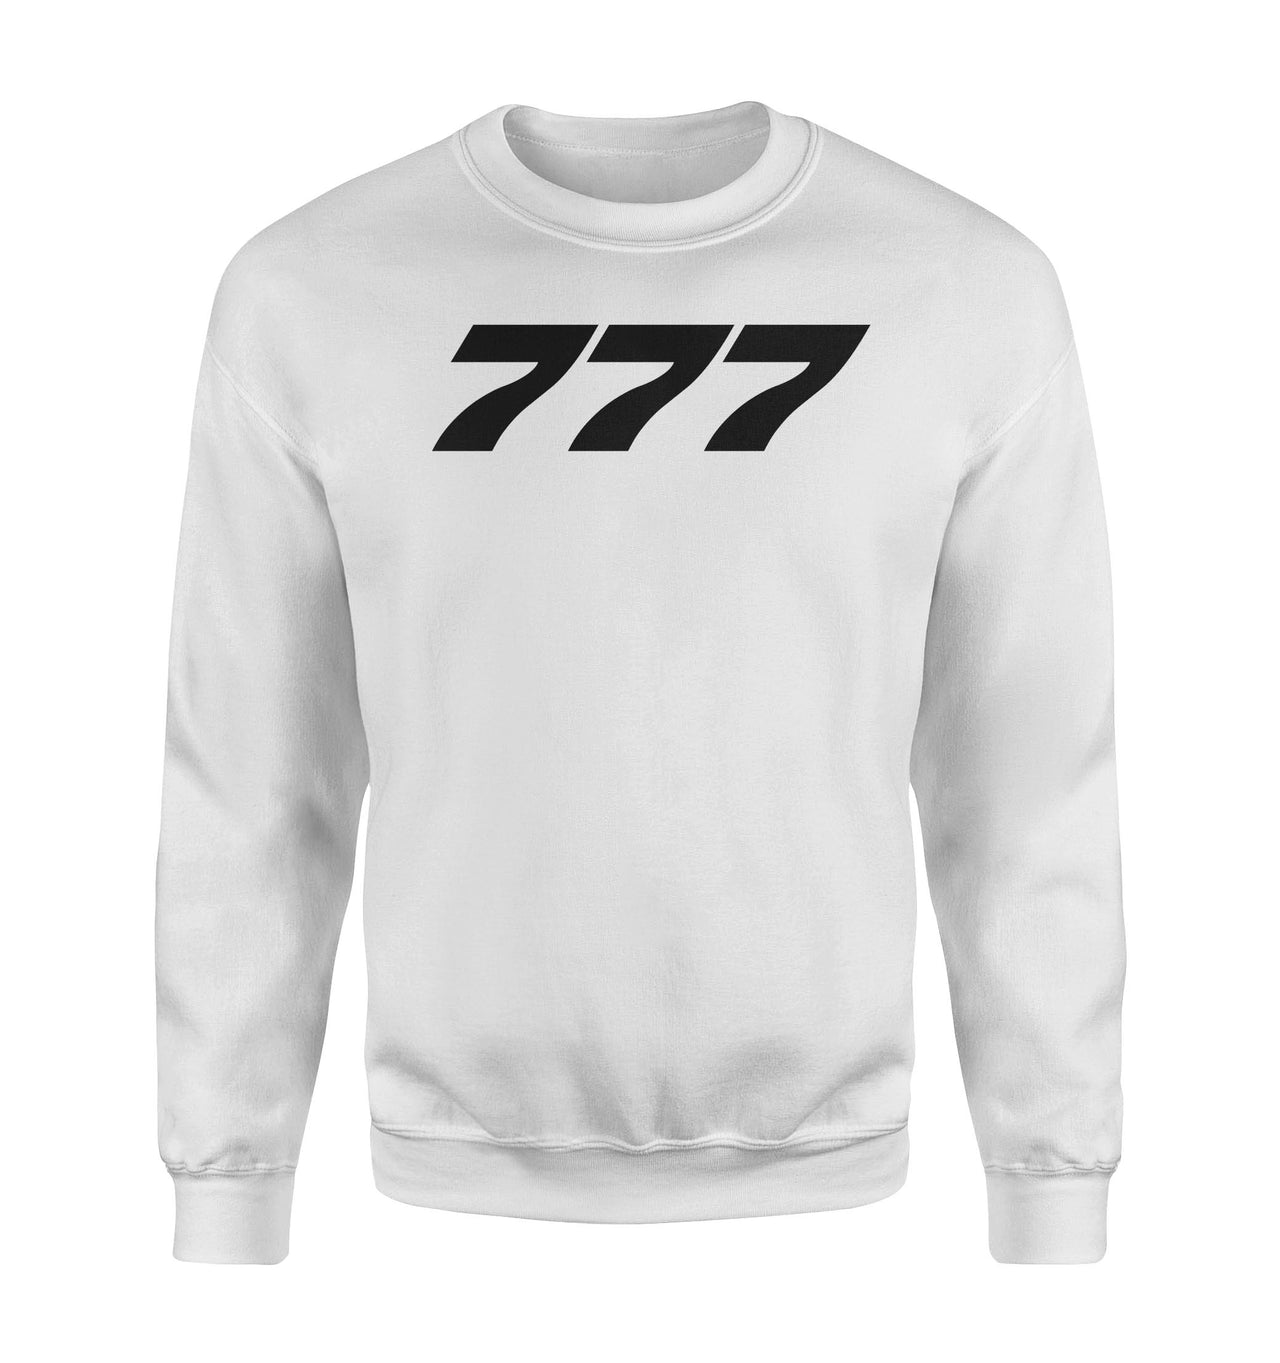 777 Flat Text Designed Sweatshirts